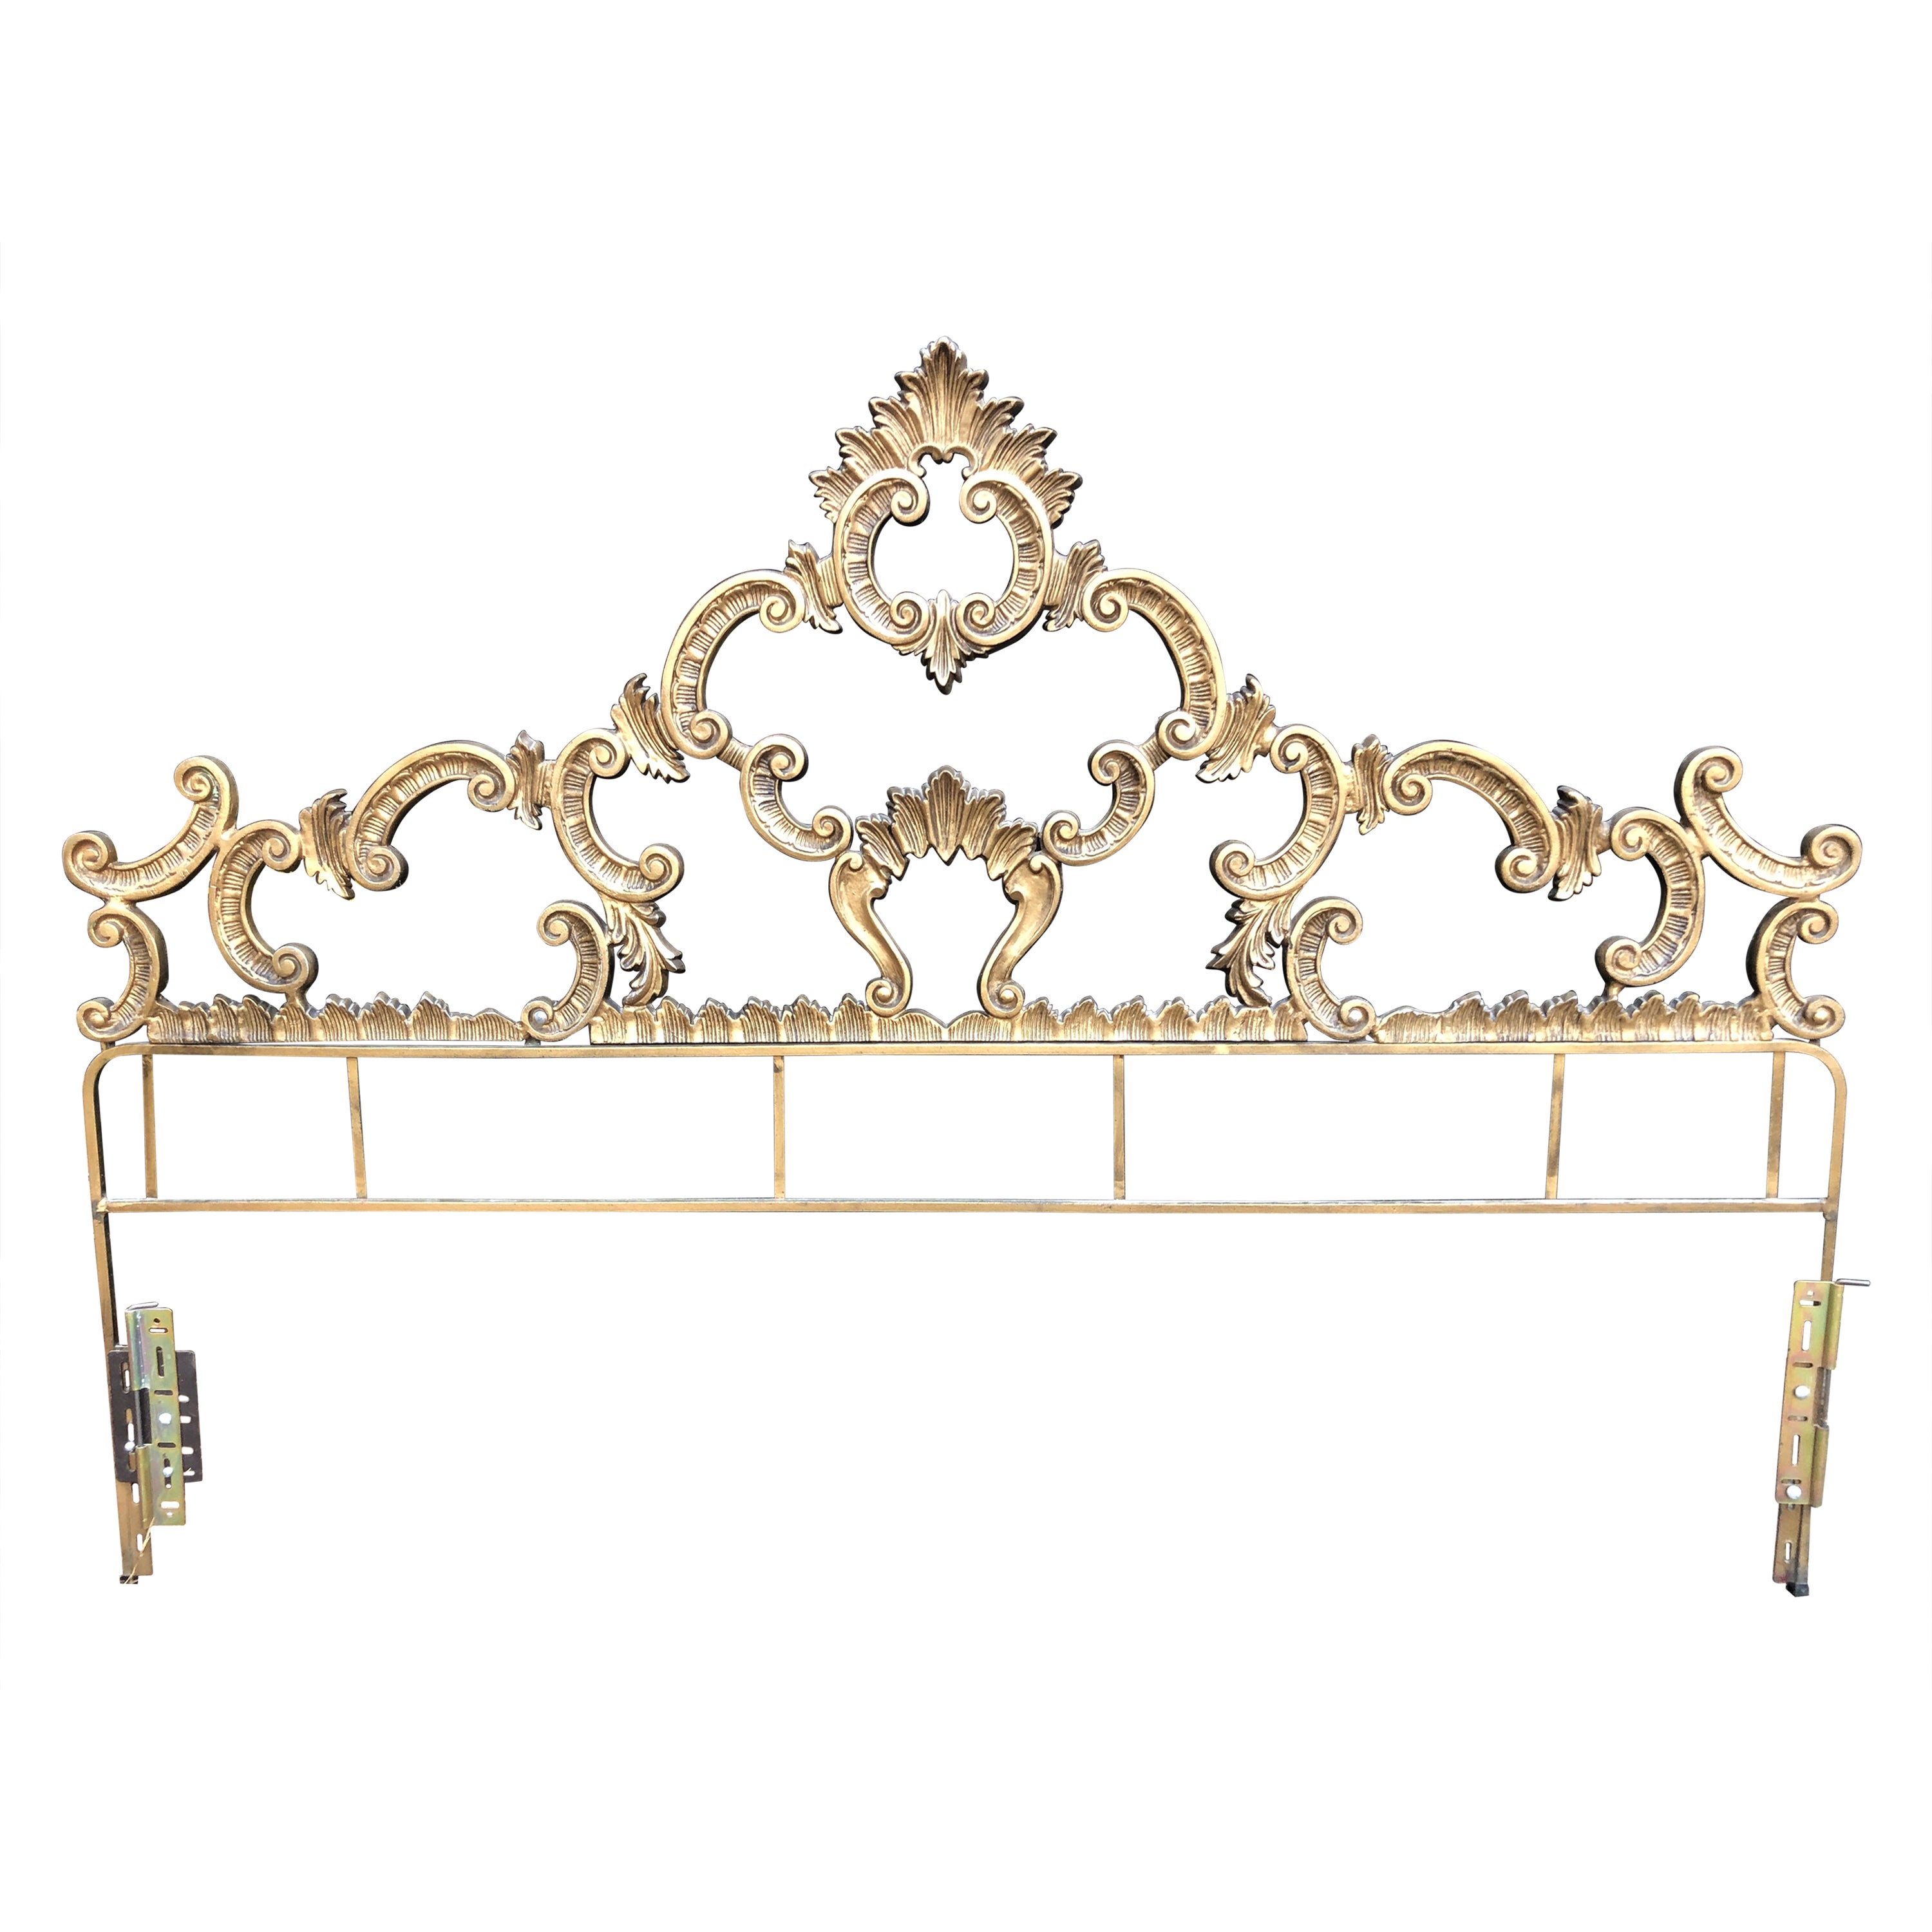 Stunning Hollywood Regency Ornate Gold Iron Kingsize Headboard Bed